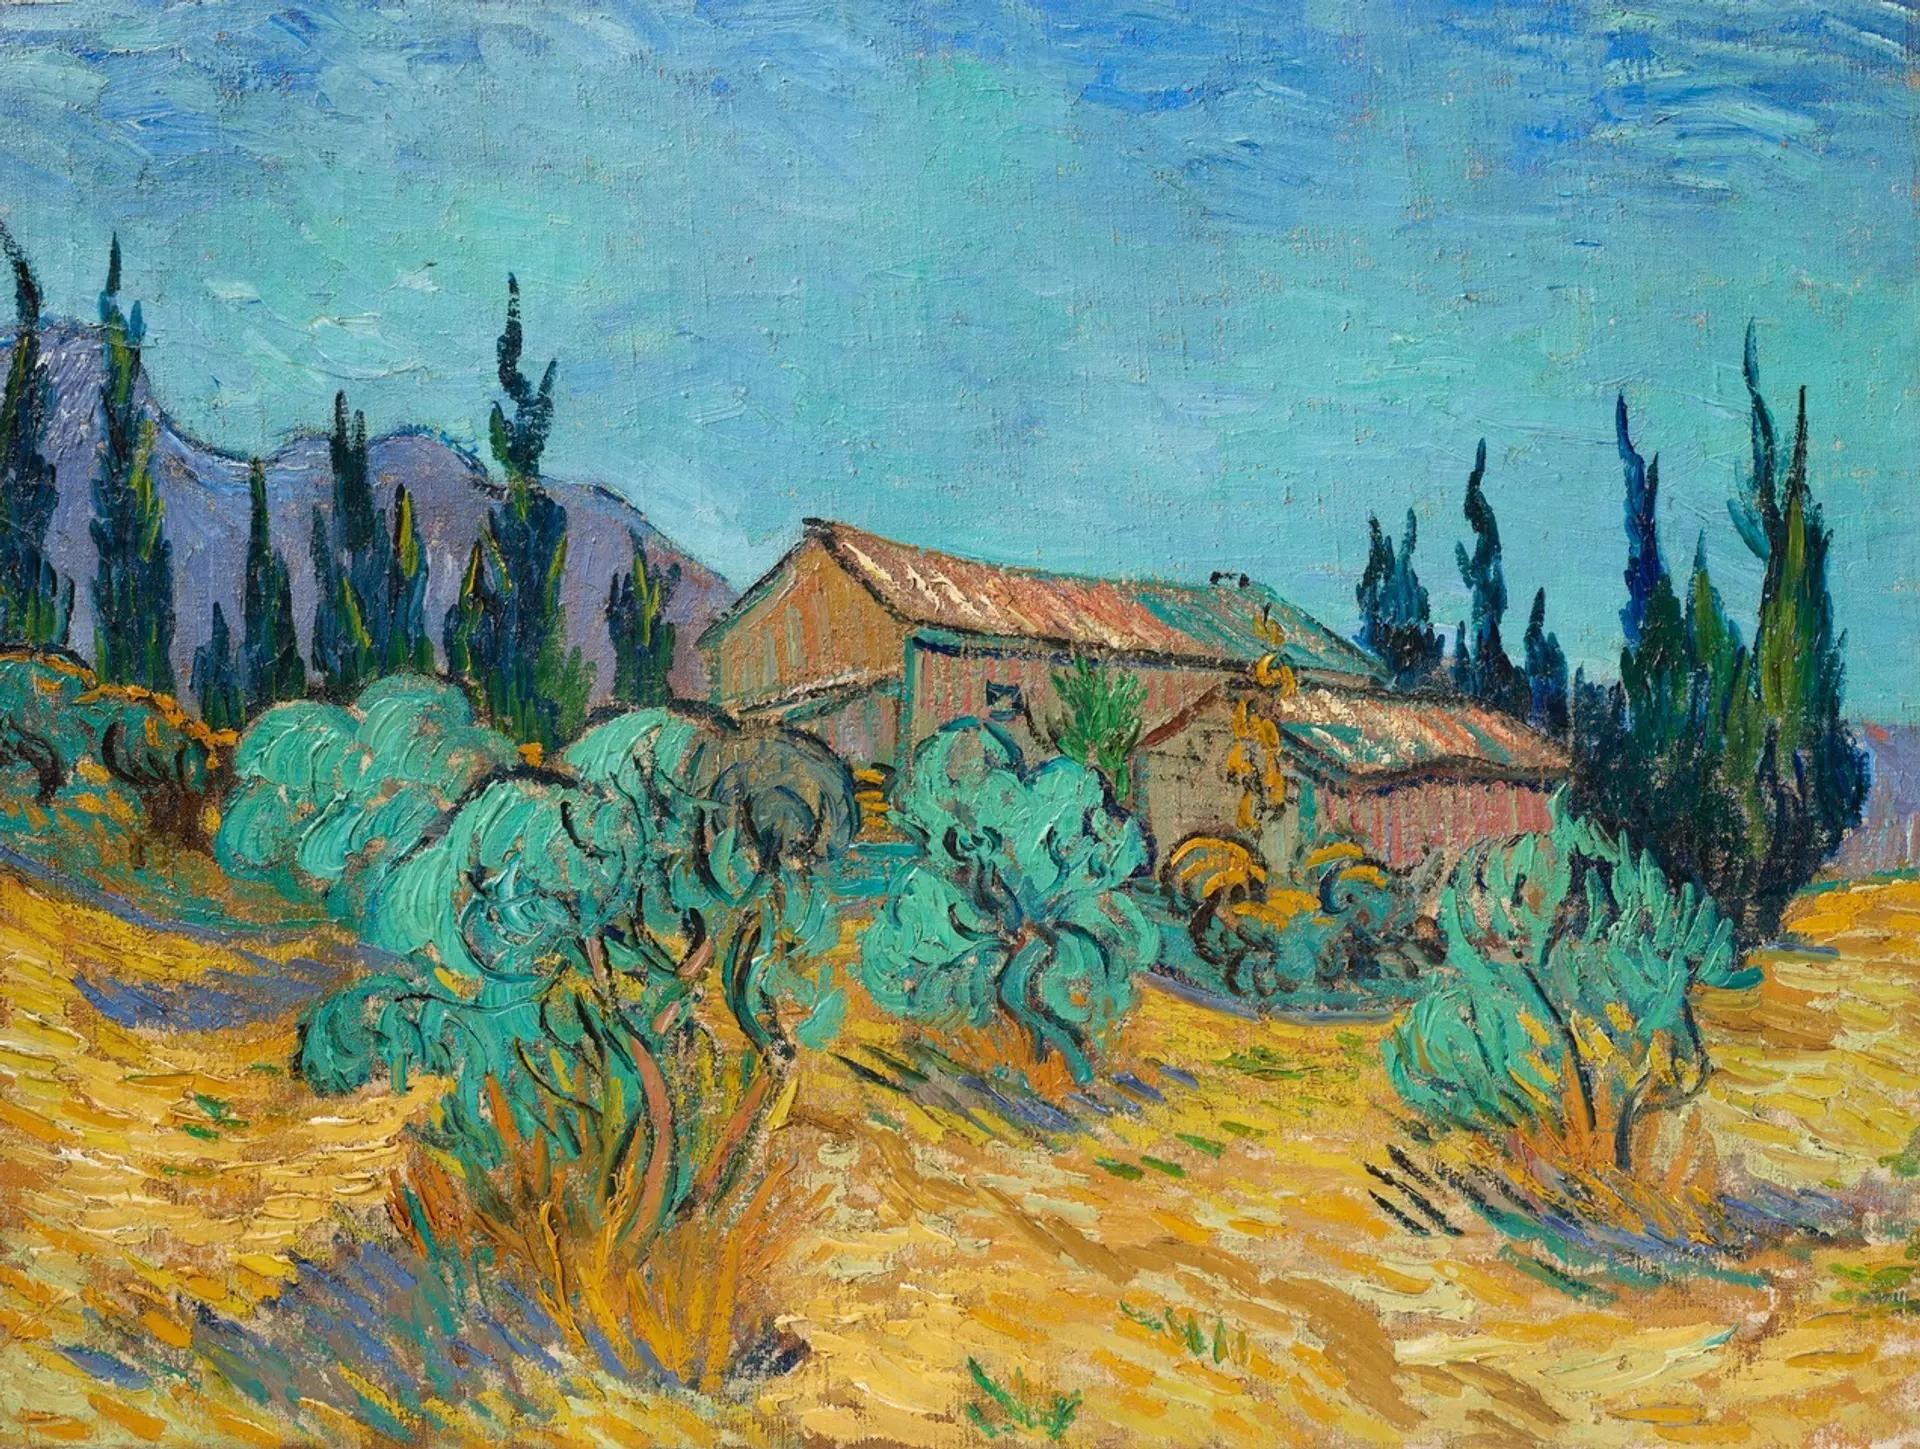 Van Gogh’s Wooden Cabins among the Olive Trees and Cypresses (Cabanes de bois parmi les oliviers et cyprès) (October 1889), sold for $71.3m © Christie’s Images Ltd 2021